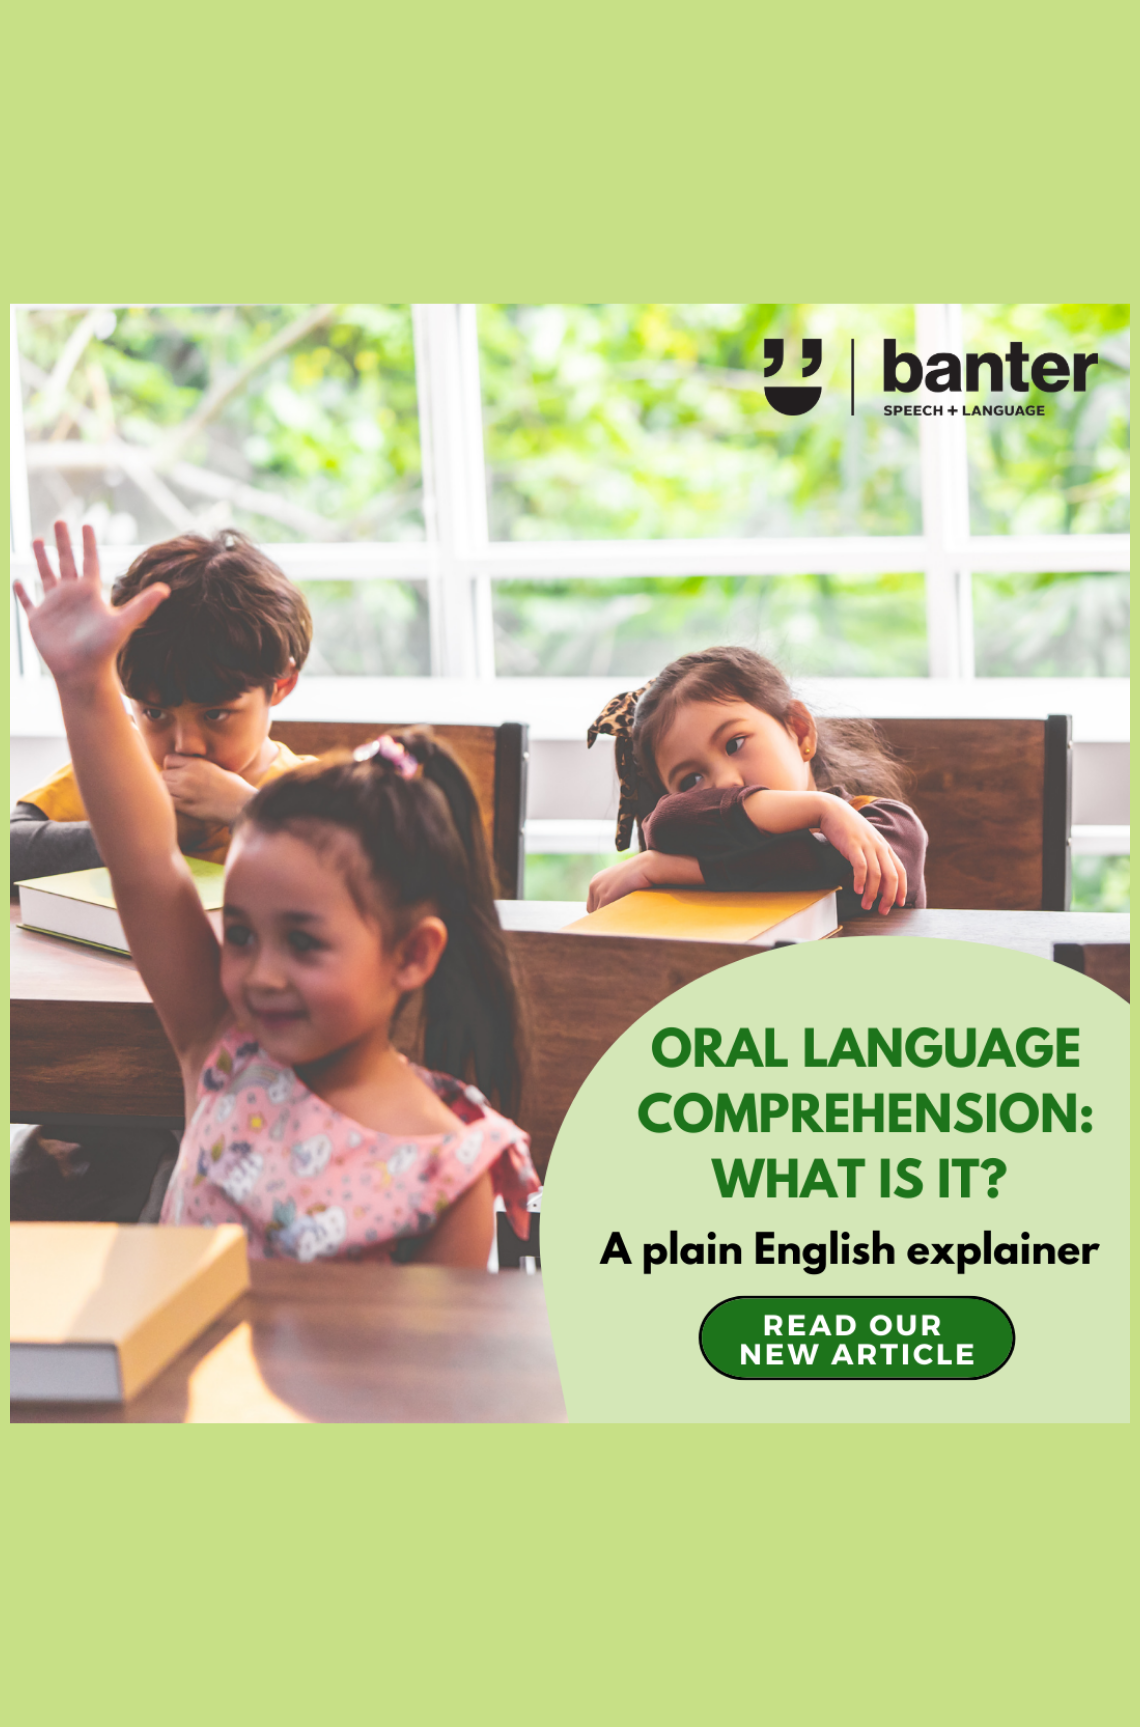 Oral language comprehension: what is it? A plain English explainer